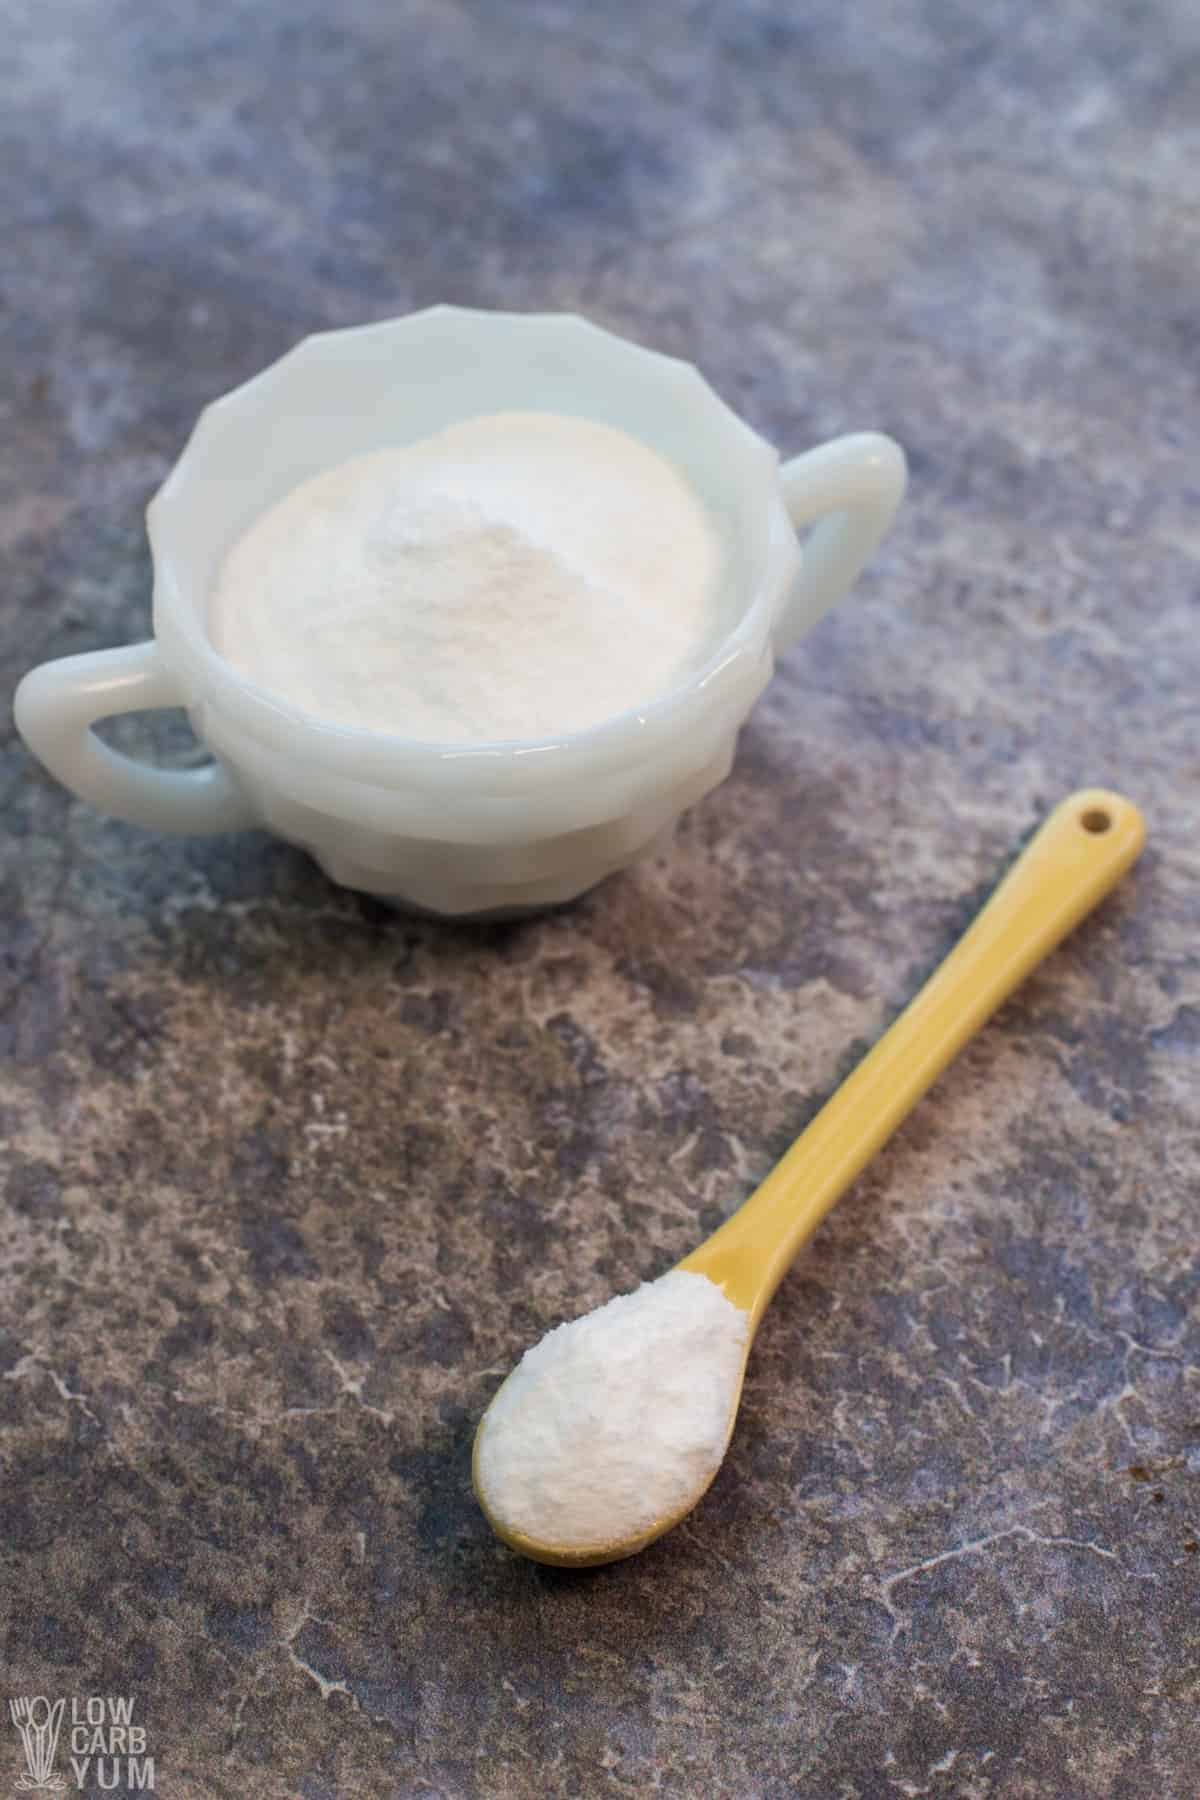 allulose keto sweetener in dish and spoon